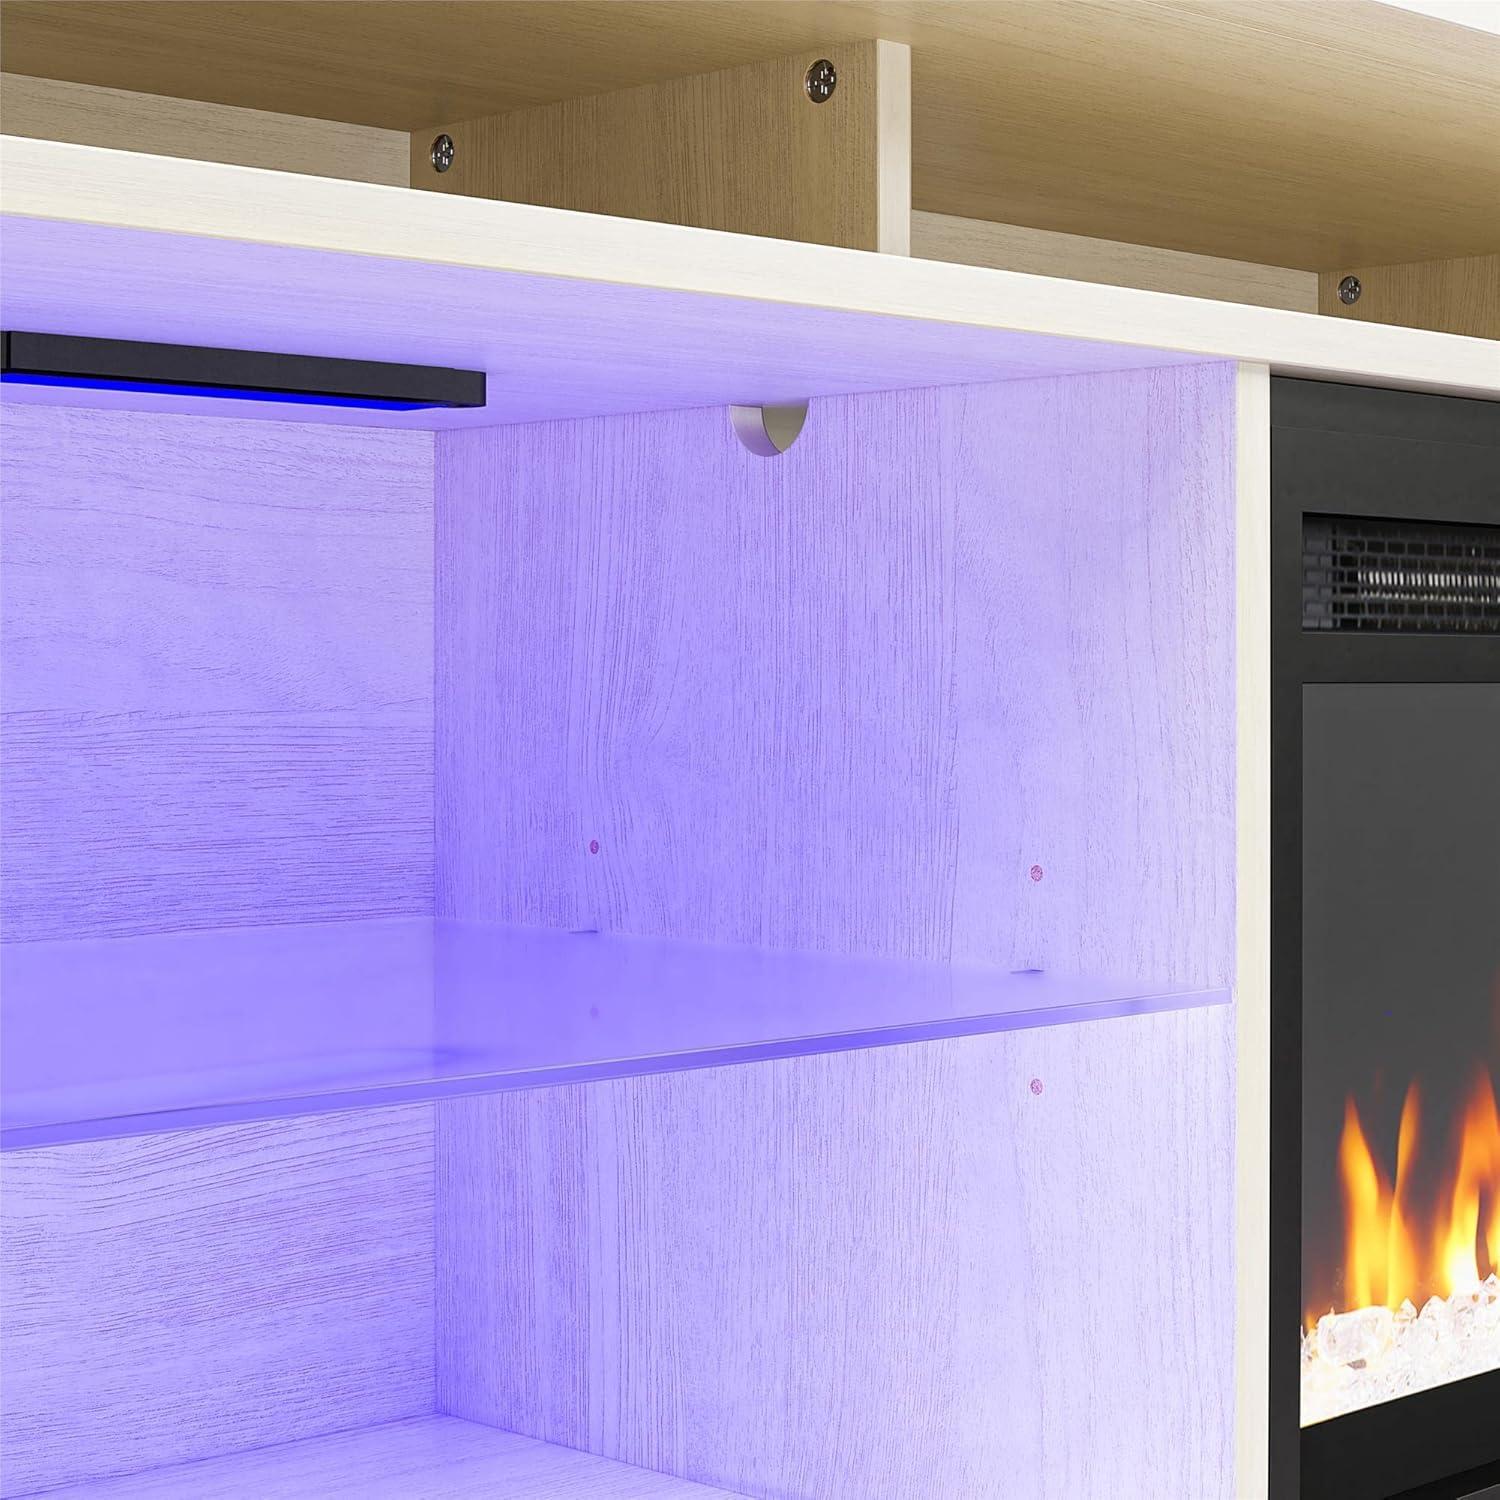 Luna Ivory Oak 65" Fireplace TV Stand with Adjustable Glass Shelves